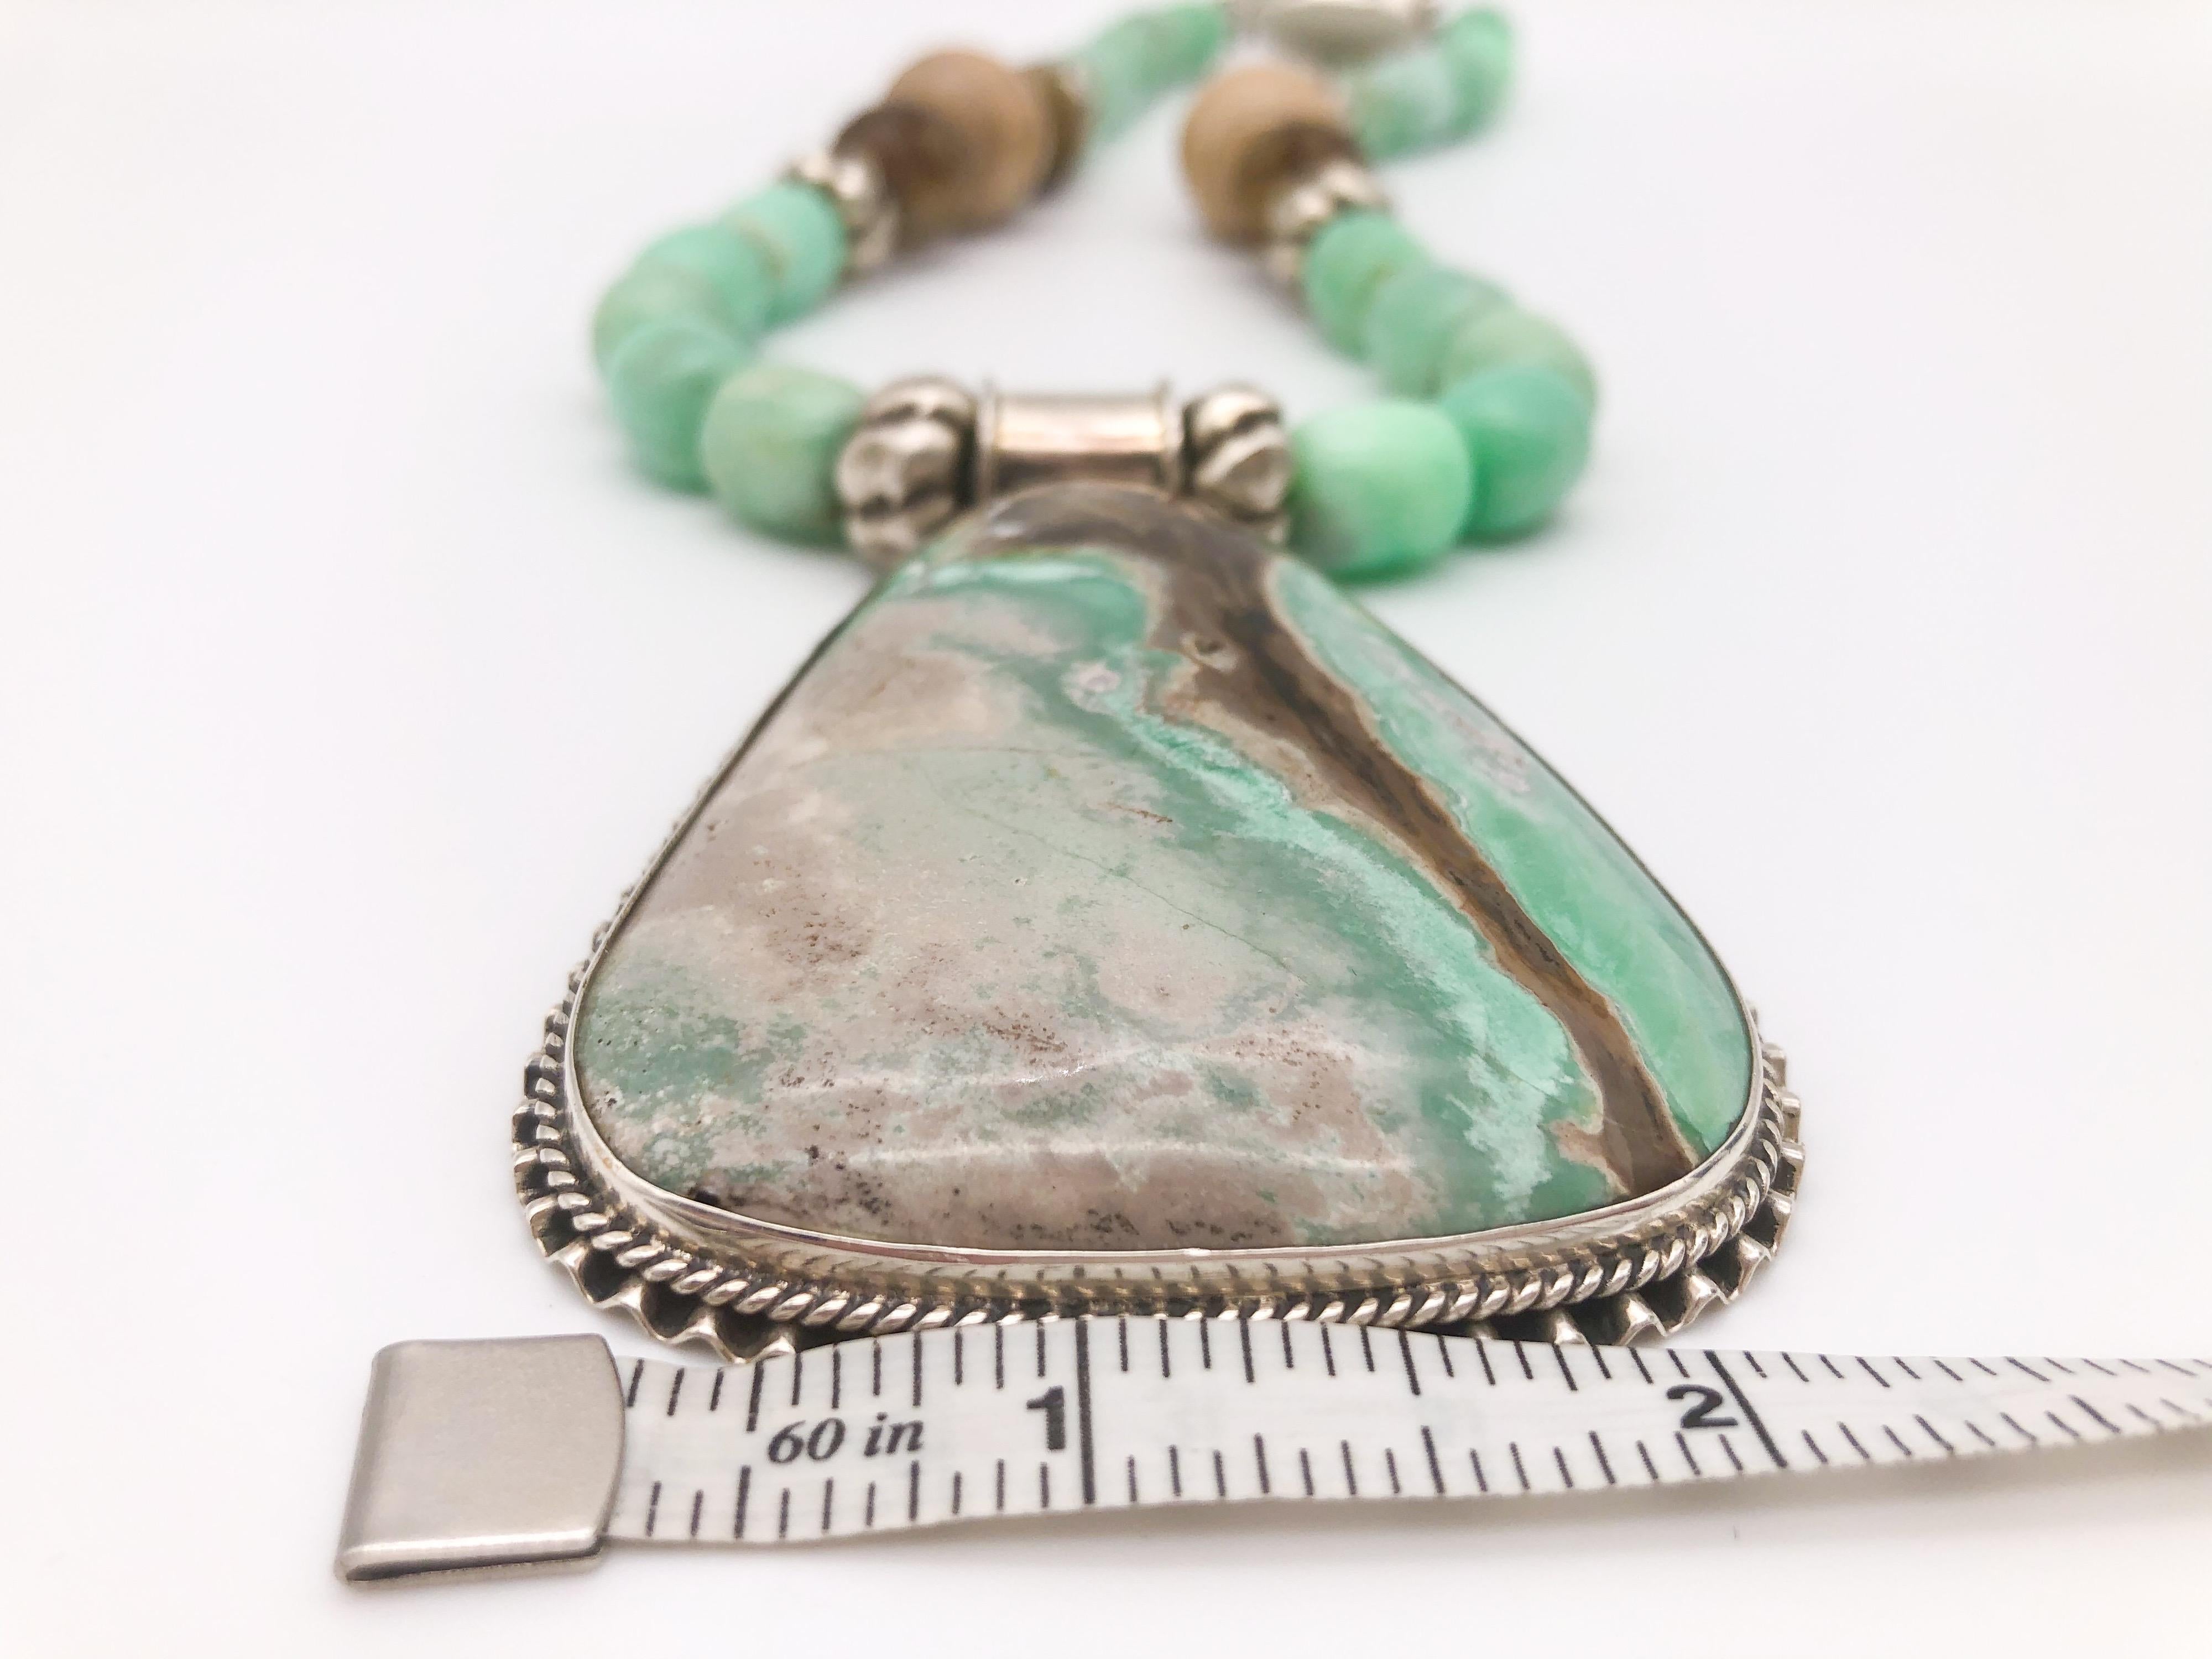 A.Jeschel Polished Chrysoprase Specimen Pendant Necklace For Sale 7